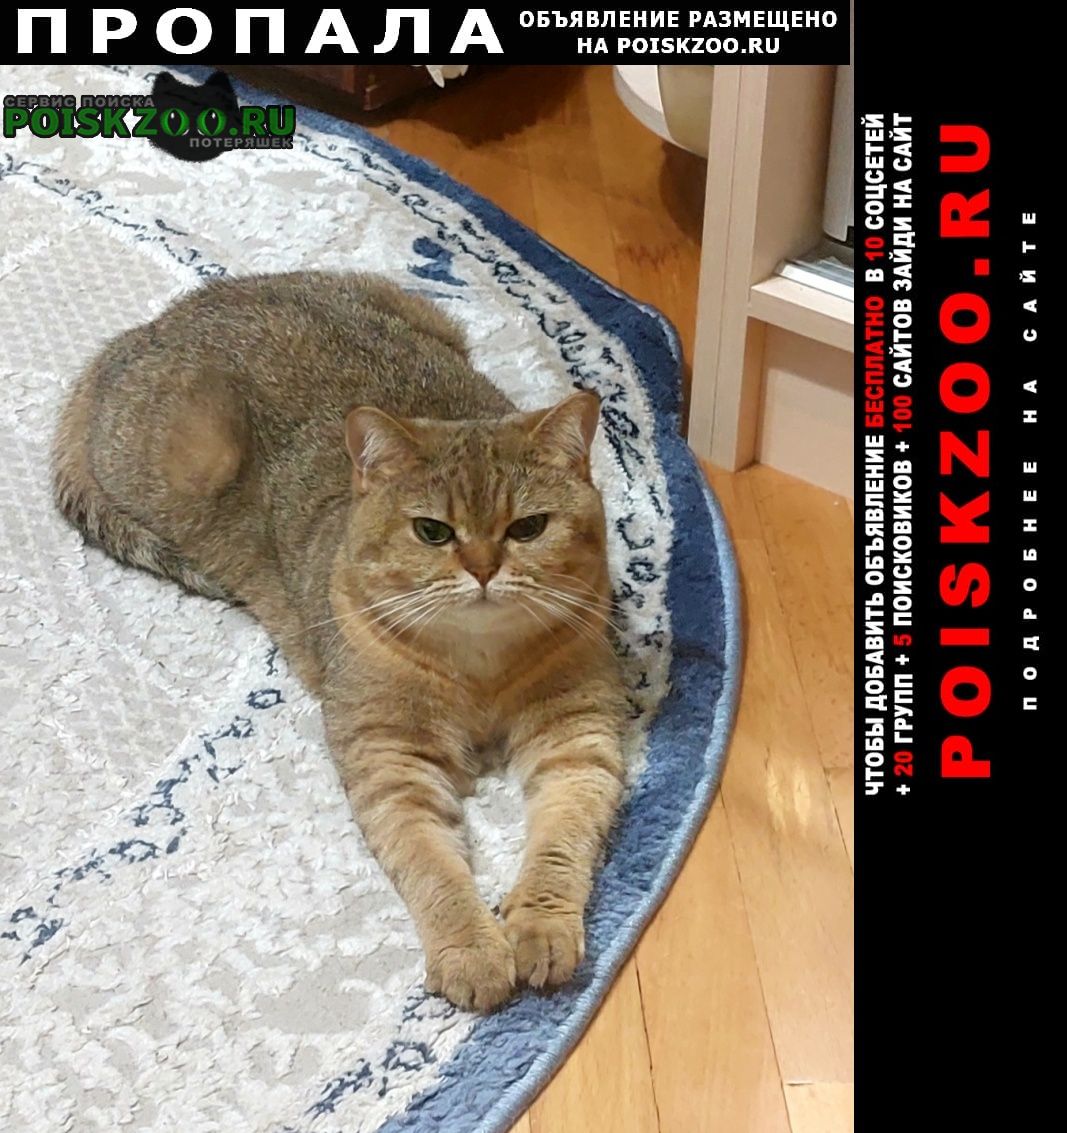 Пропала кошка срочно Москва